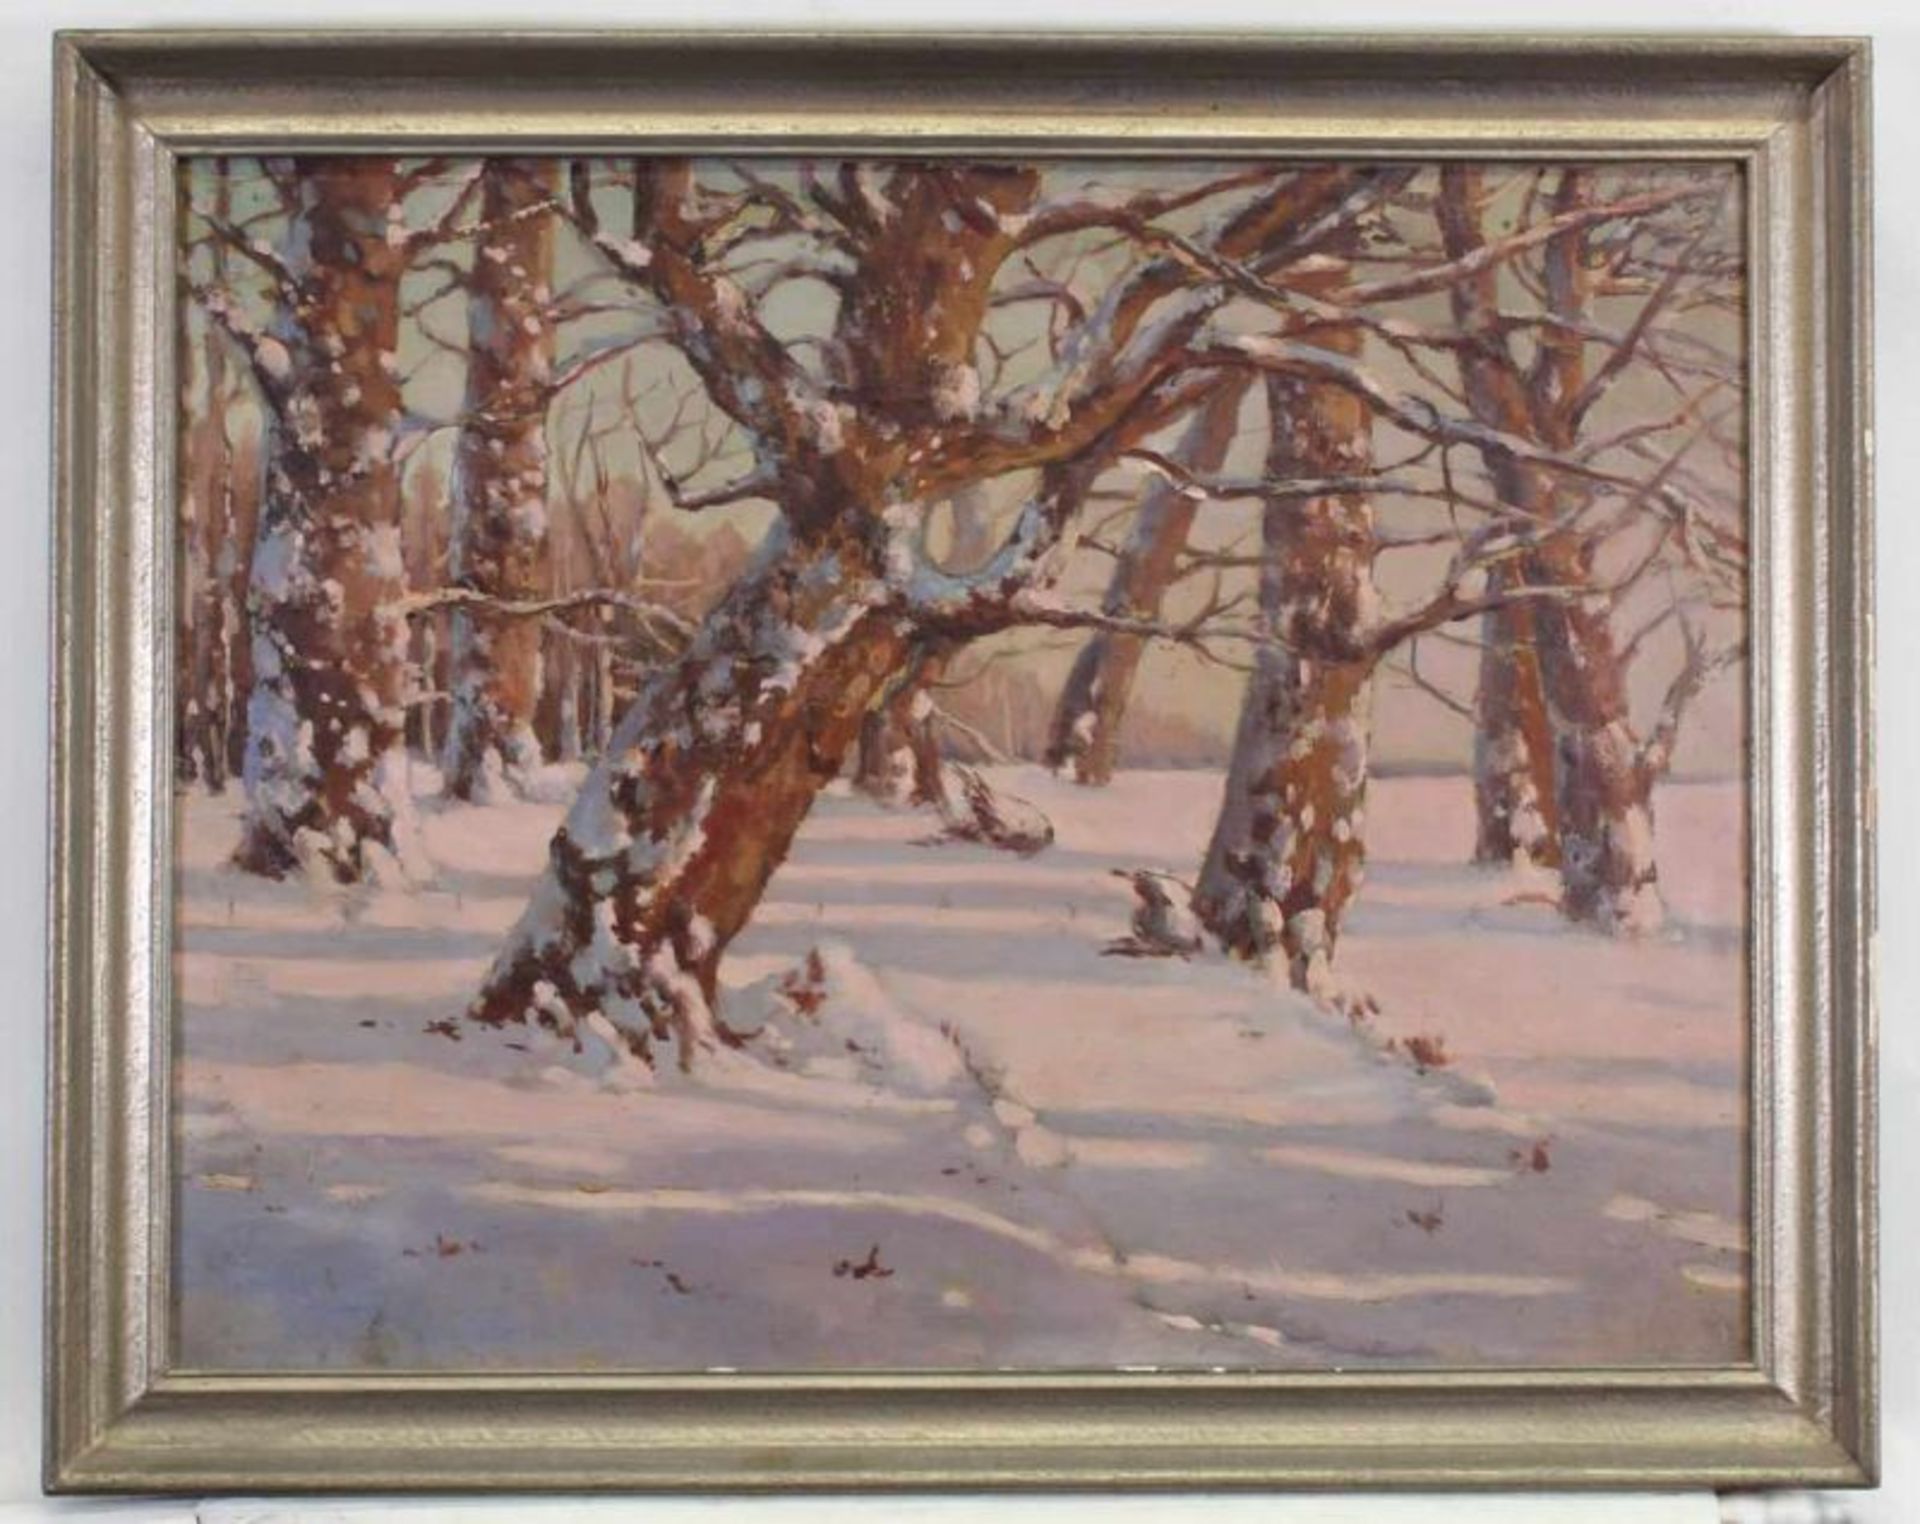 Landschaftsmaler (19./20. Jh.), "Winterabendsonne", Öl auf Leinwand, 50 x 65 cm, verso - Image 2 of 3